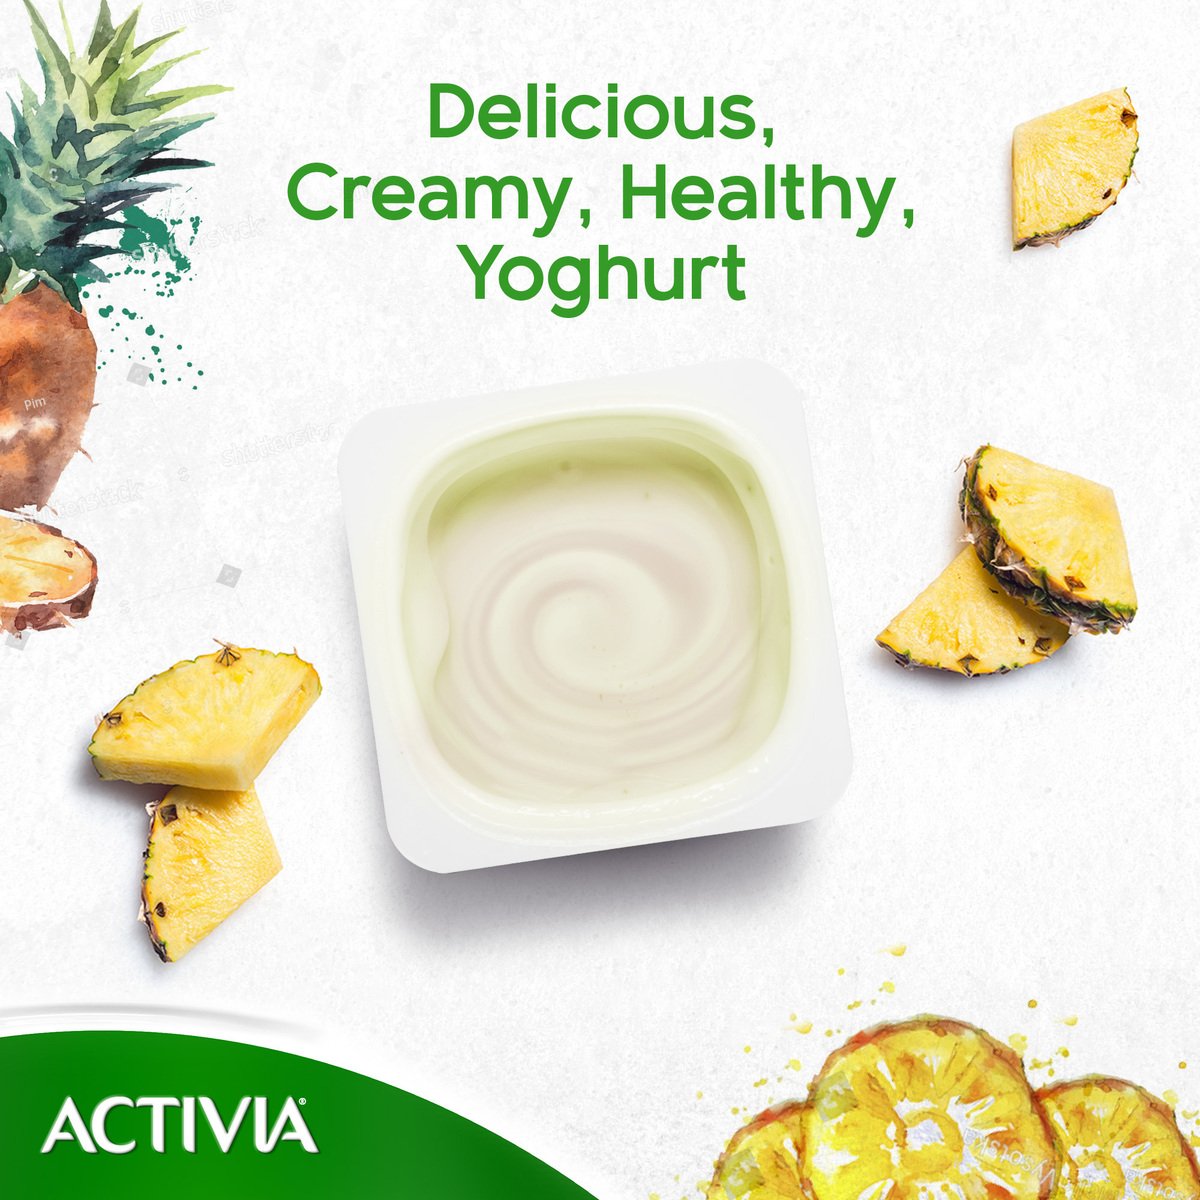 Activia Stirred Yoghurt Full Fat Pineapple 120 g